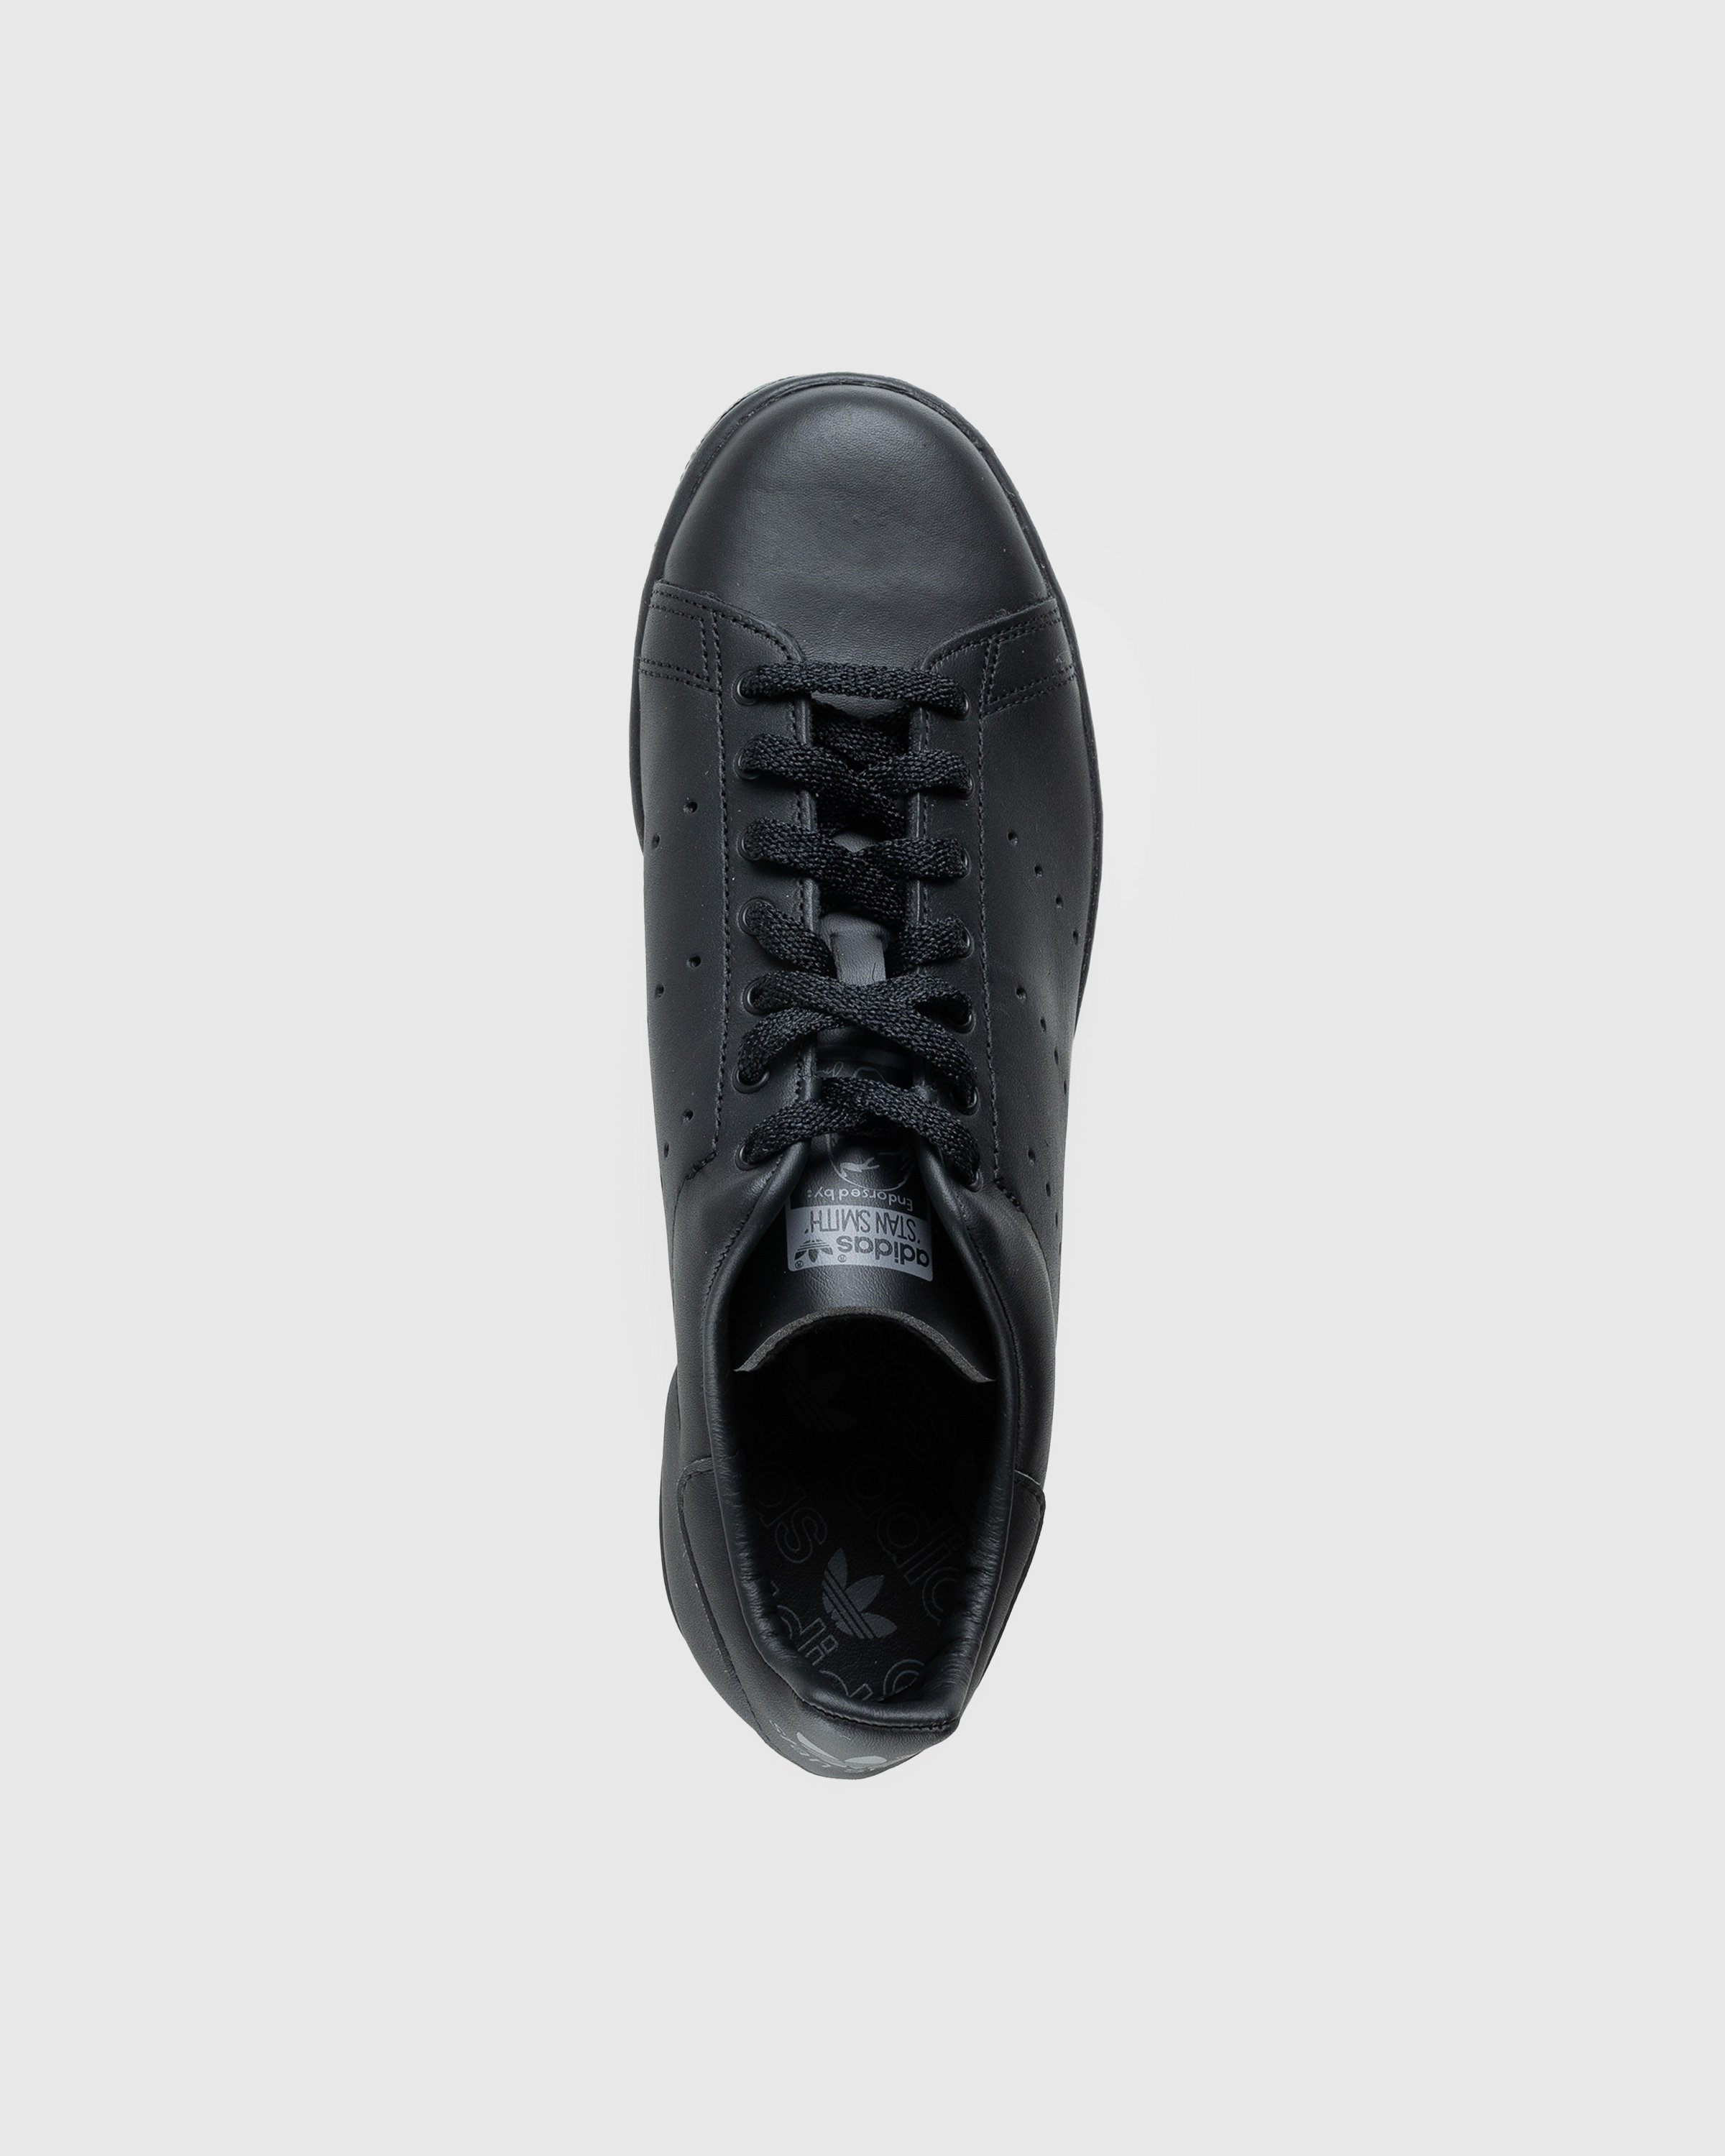 Adidas - Stan Smith 80s Black - Footwear - Black - Image 5